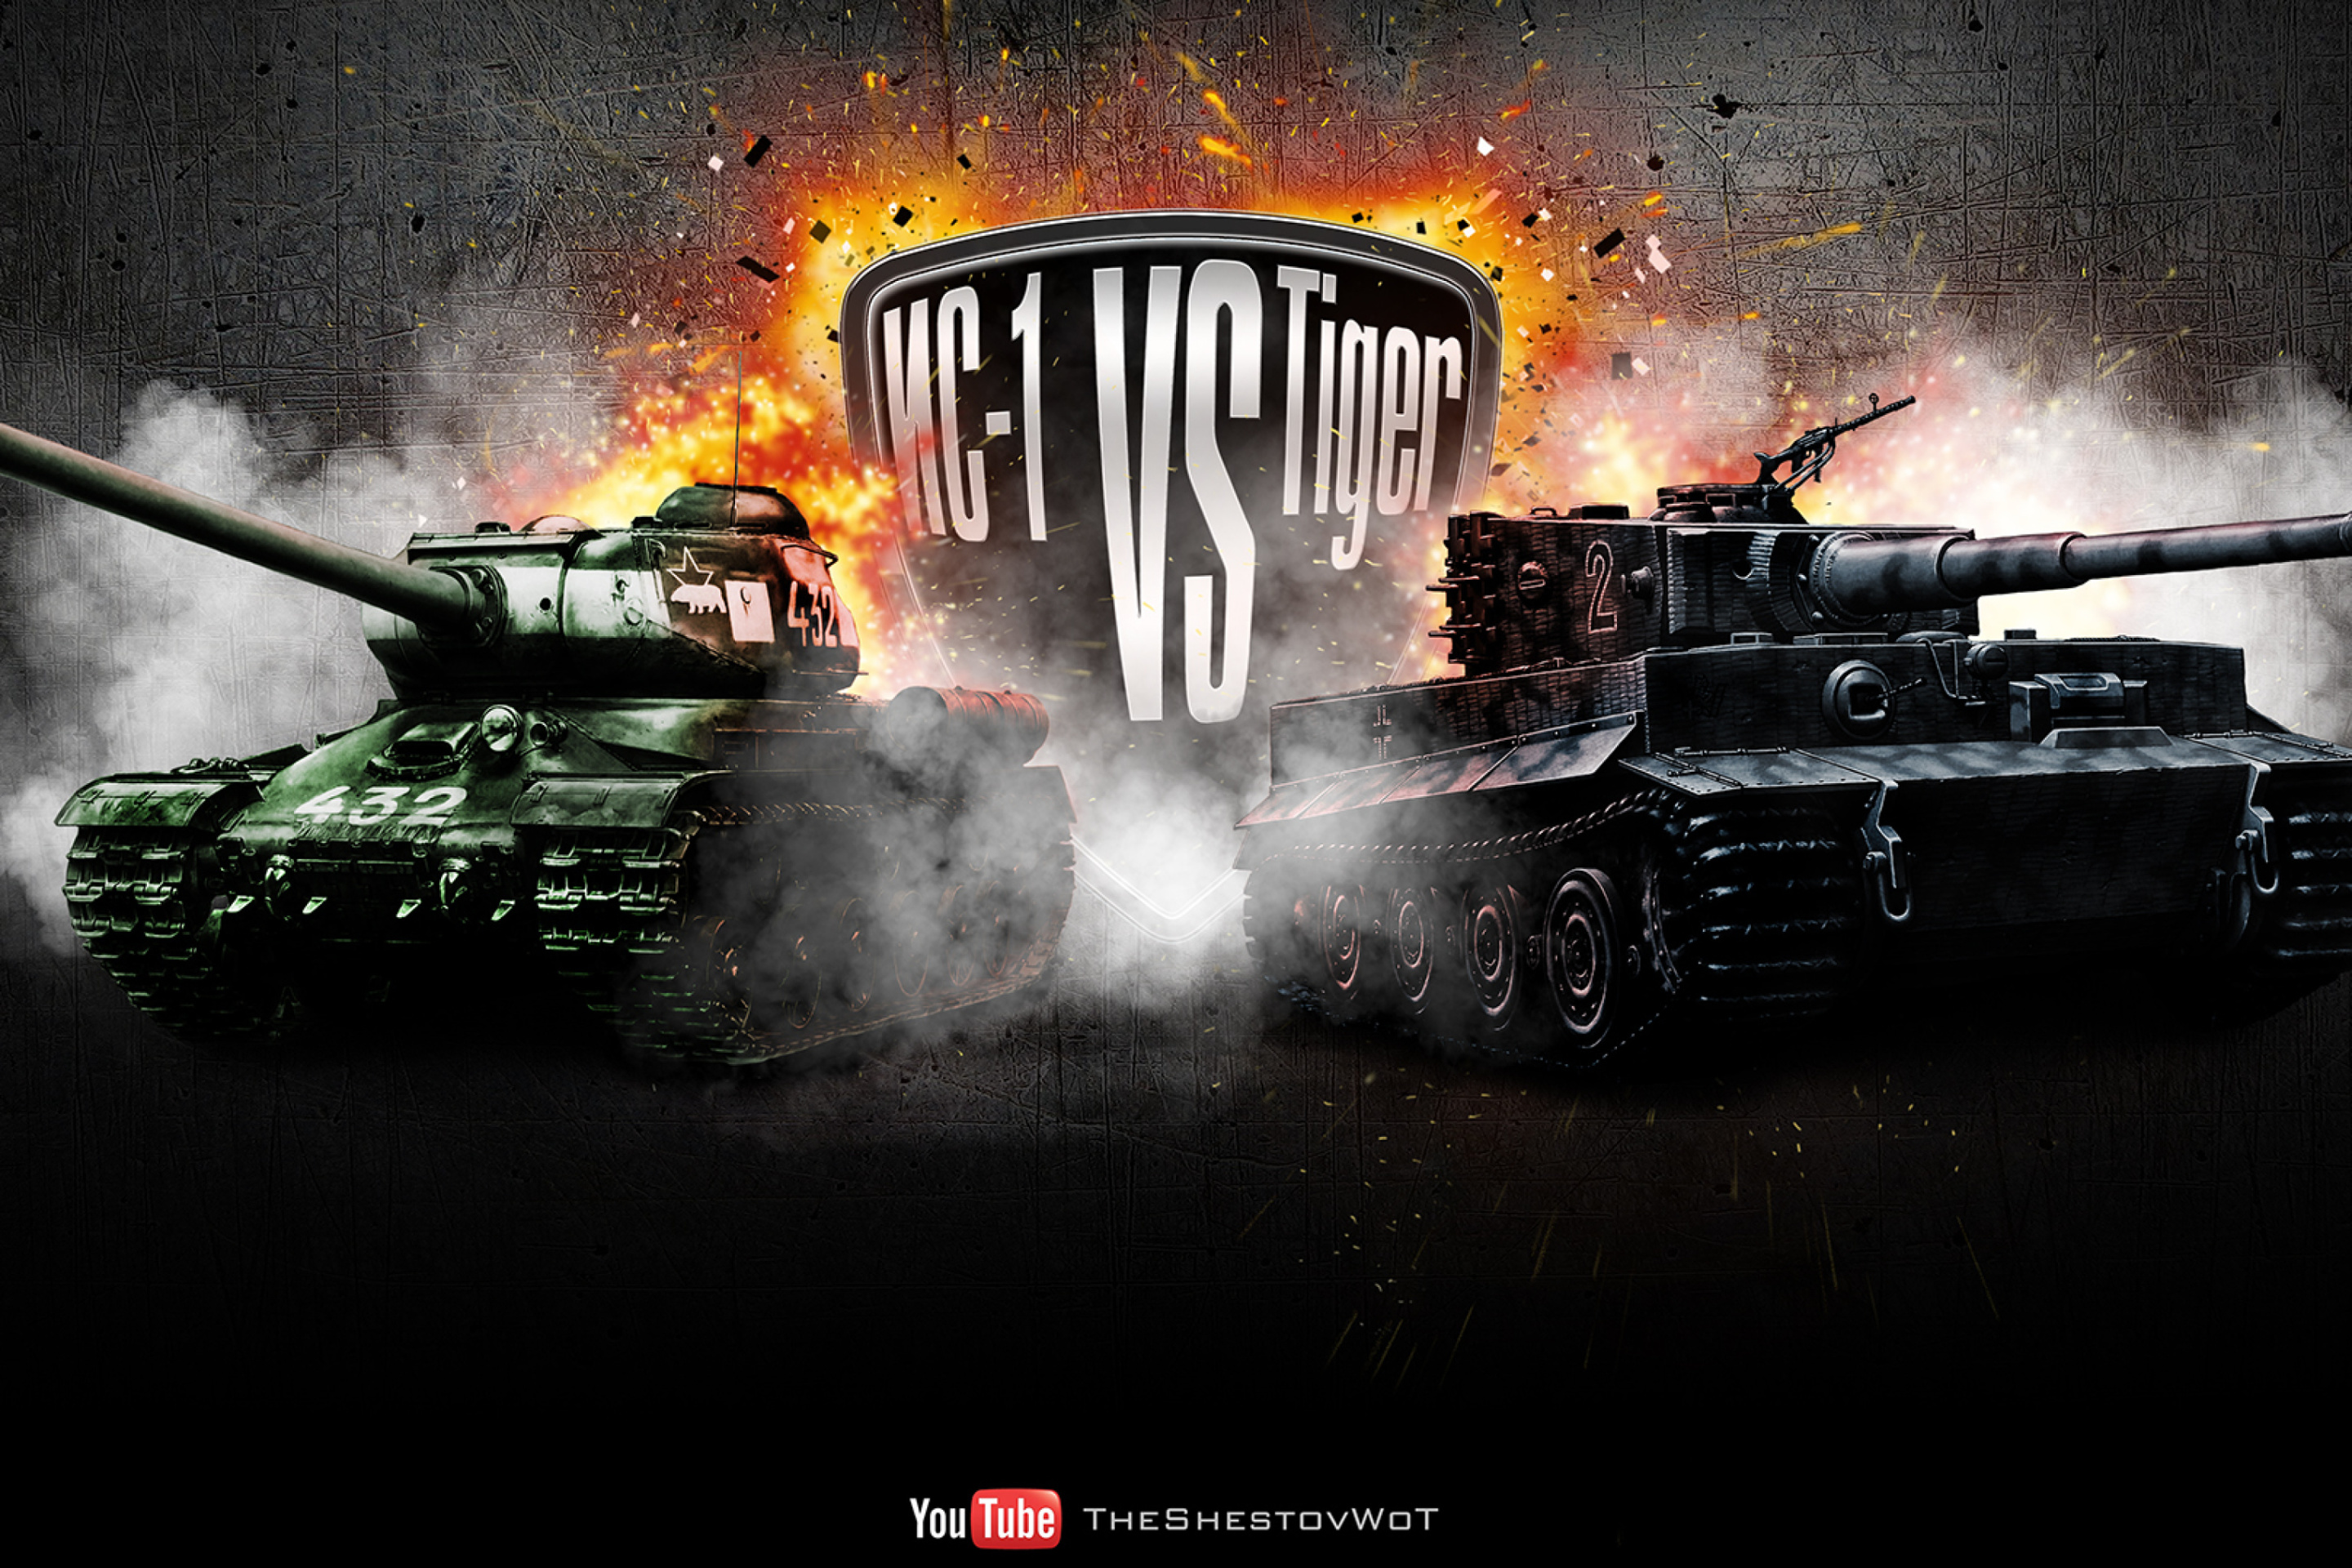 Das World of Tanks Tiger VS IC1 Wallpaper 2880x1920